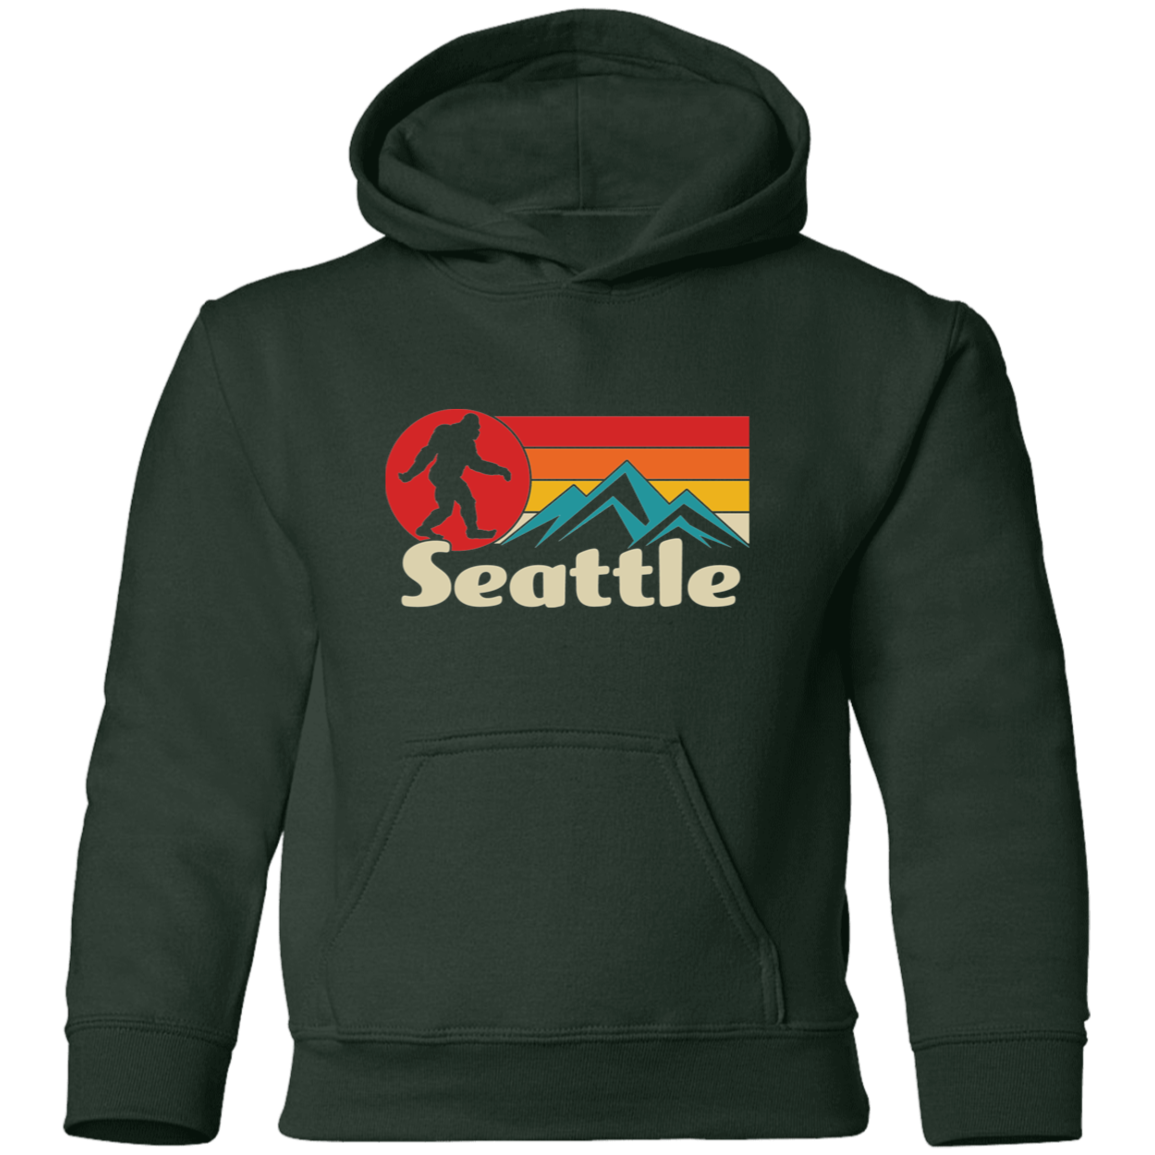 green  Seattle Bigfoot hoodie for kids